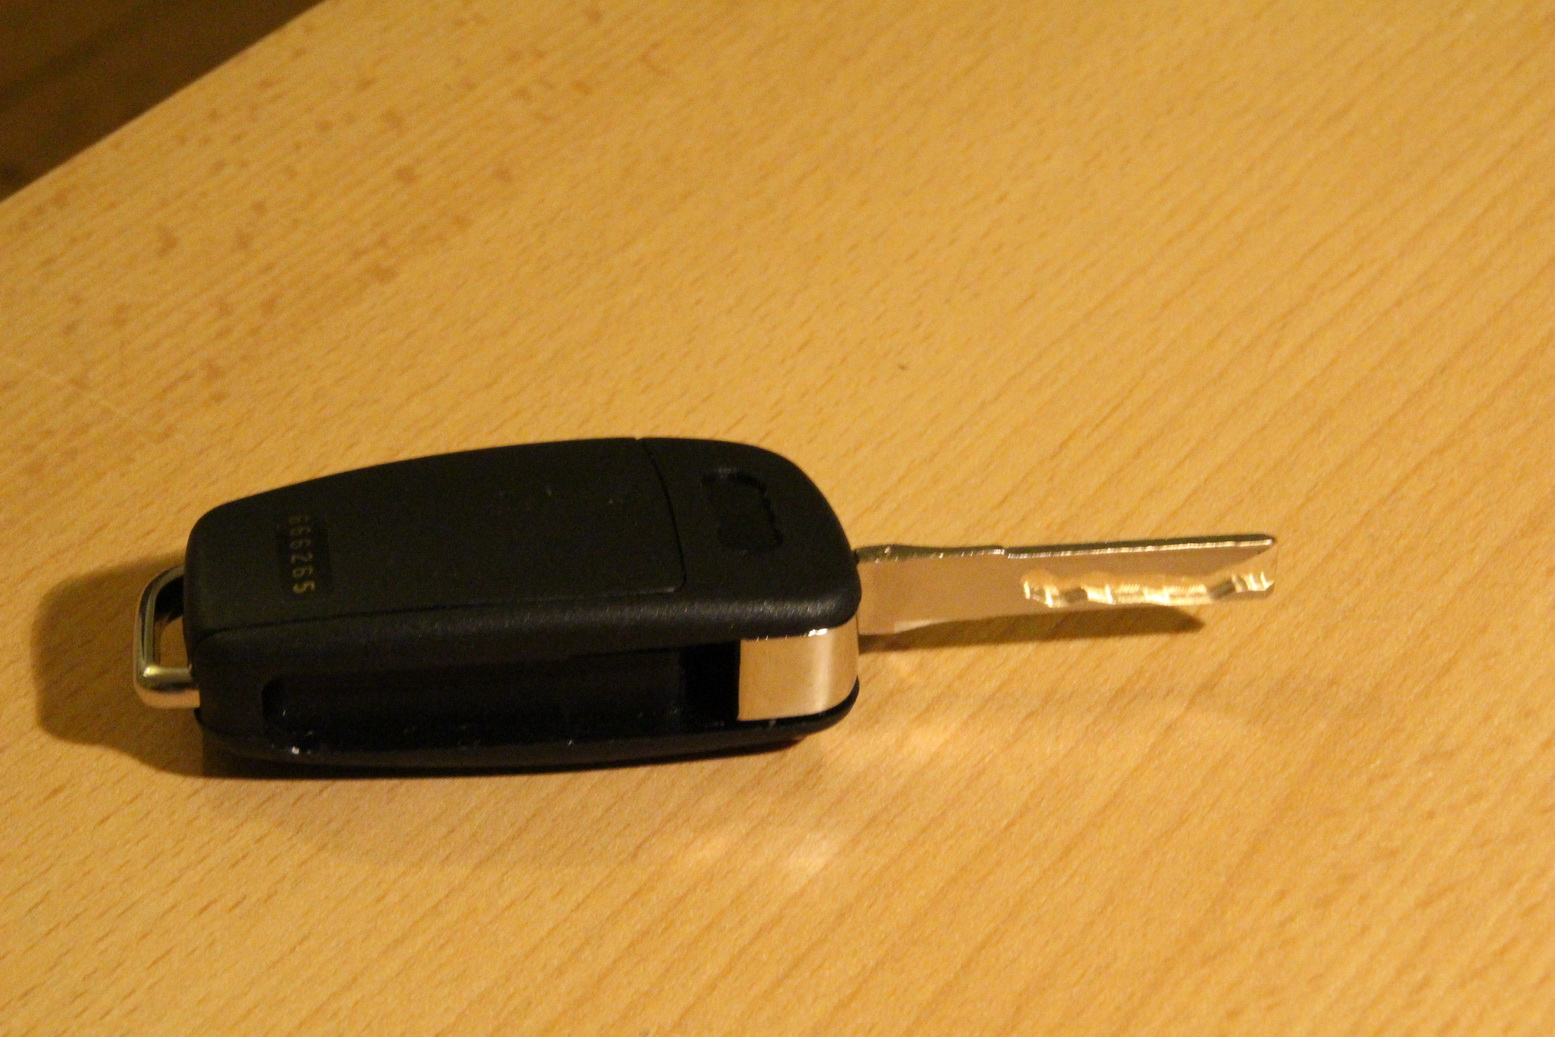 Funkschlüssel Hülle / Batterie wechseln - munity - Dein Forum  zum Thema Audi A4